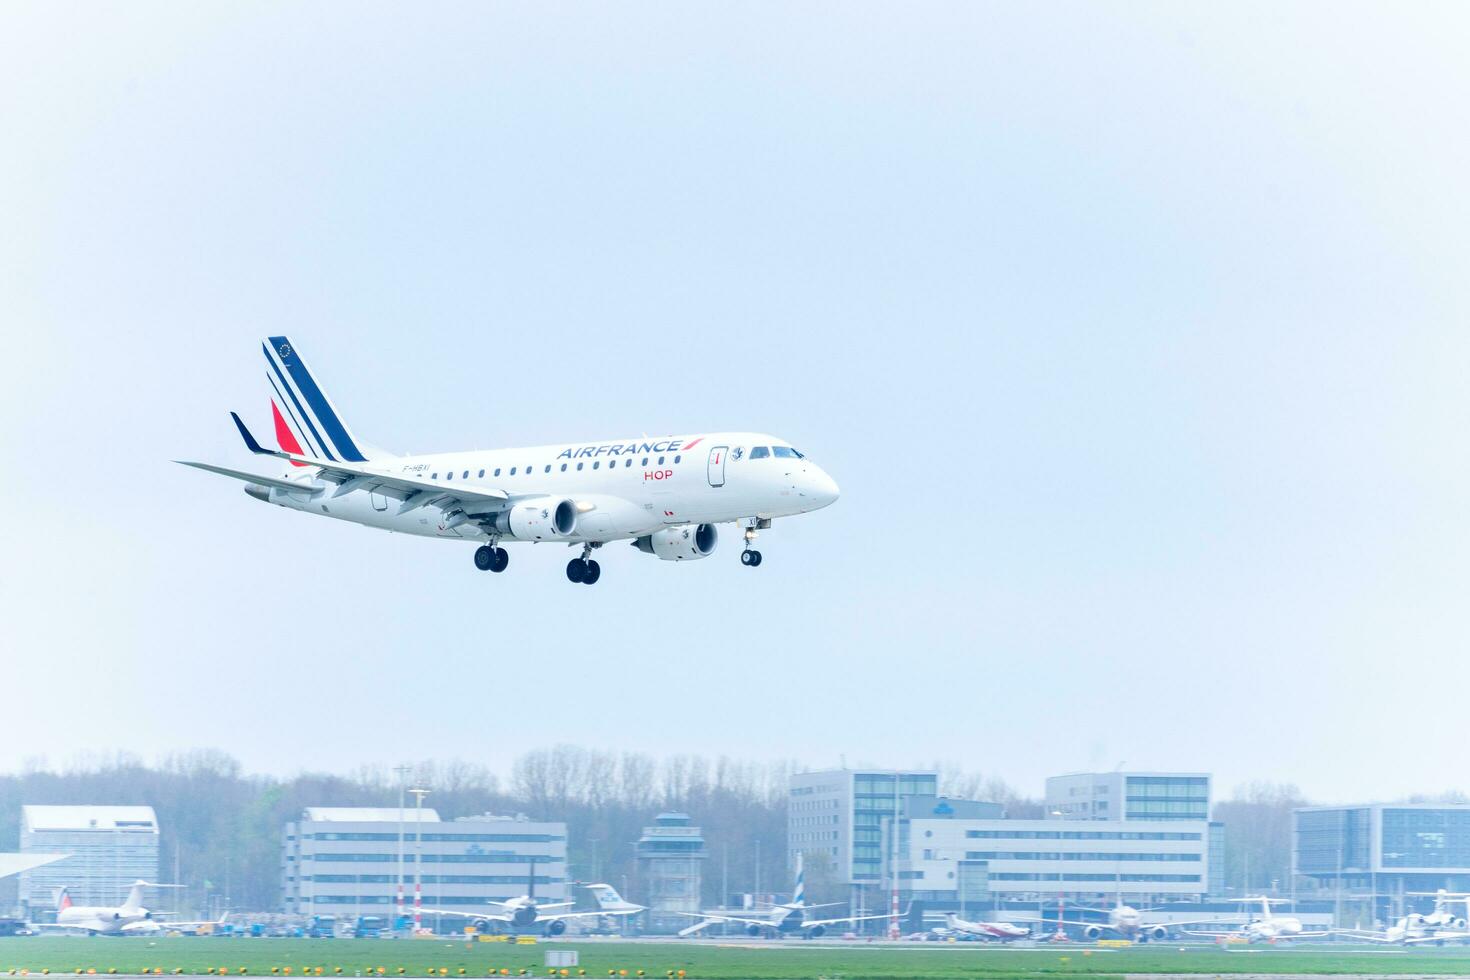 vliegtuig van Air France landen Bij schiphol luchthaven Amsterdam Nederland april 15 2023. foto